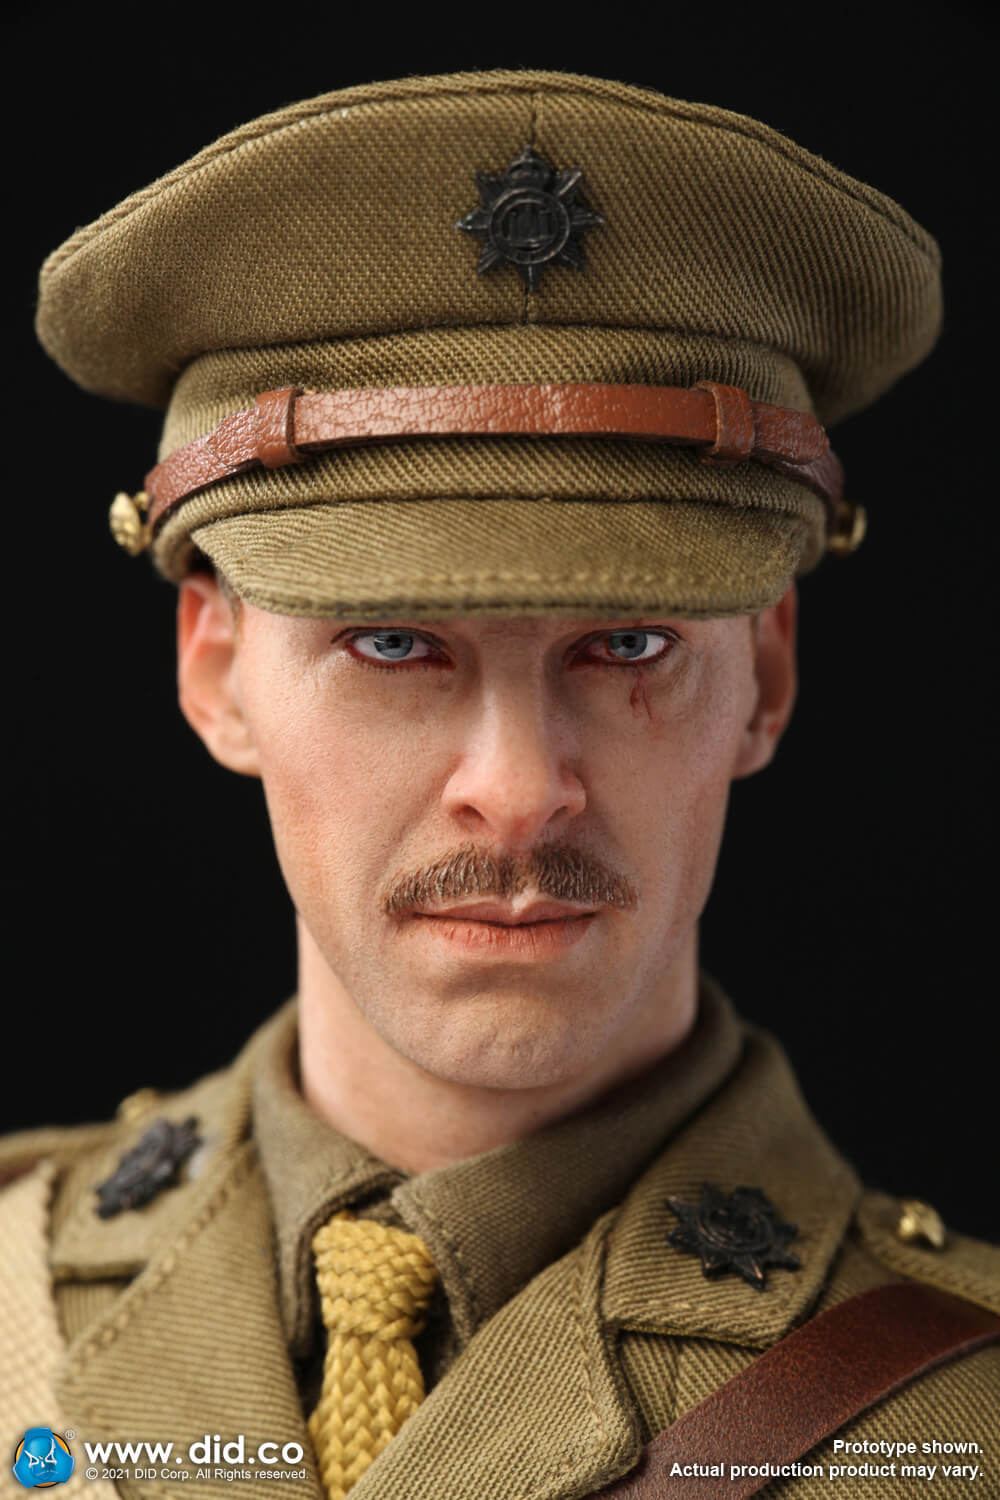 NEW PRODUCT: DiD: B11012  WW1British Officer – Colonel Mackenzie & E60062 WW1 War Desk Diorama Set  Ww1bri20